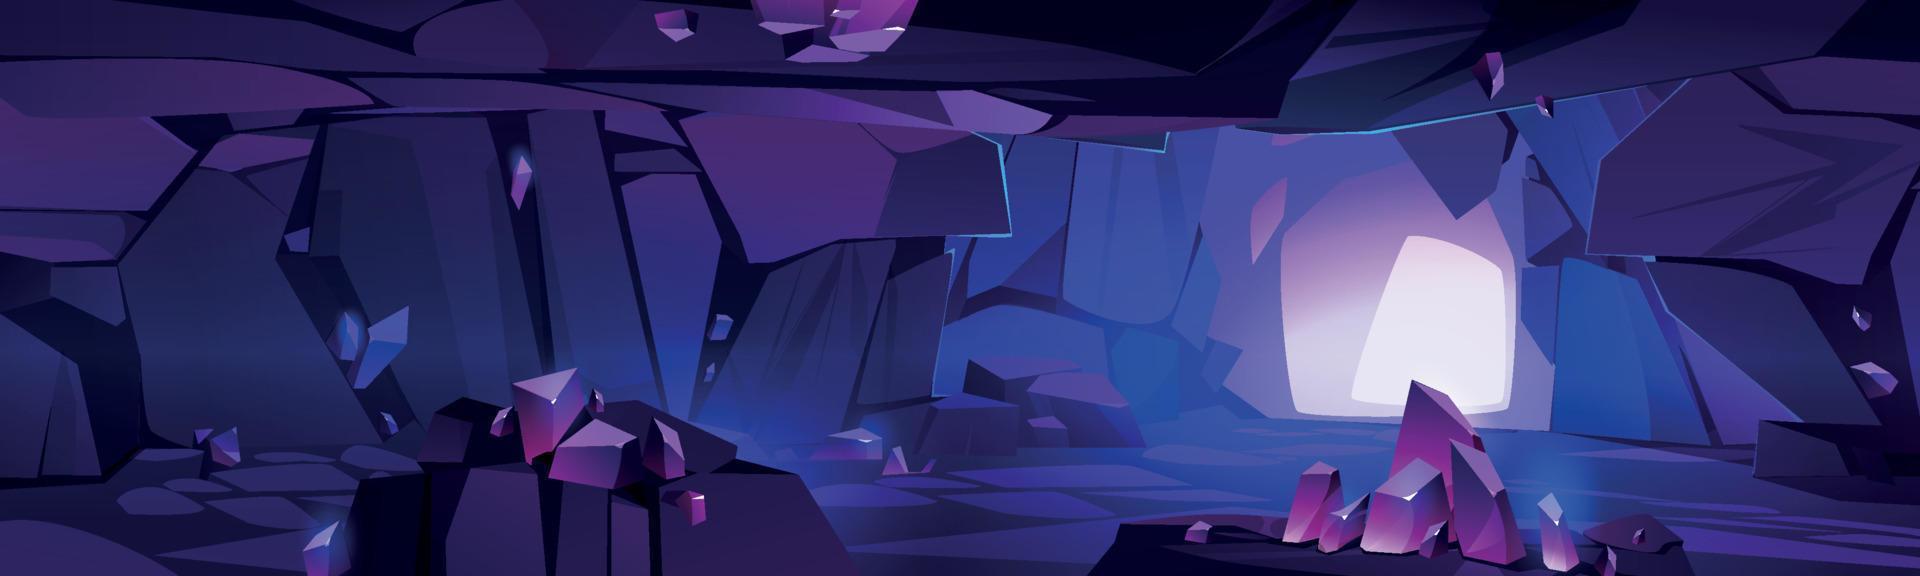 ametist mina tunnel inuti se, mystisk grotta vektor